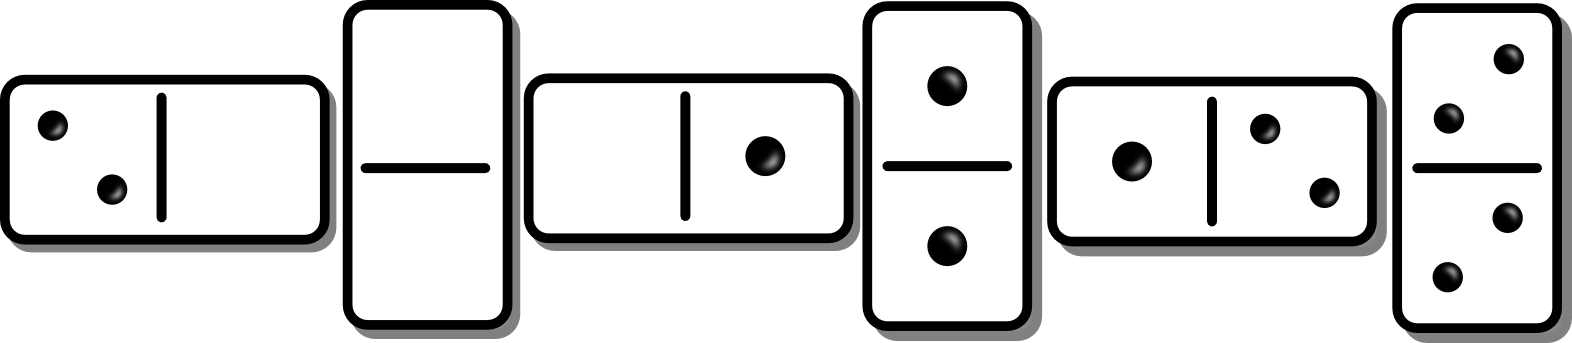 Dominoes Dominos Pizza Game Clip Art - Dominoes Clip Art (1572x343)